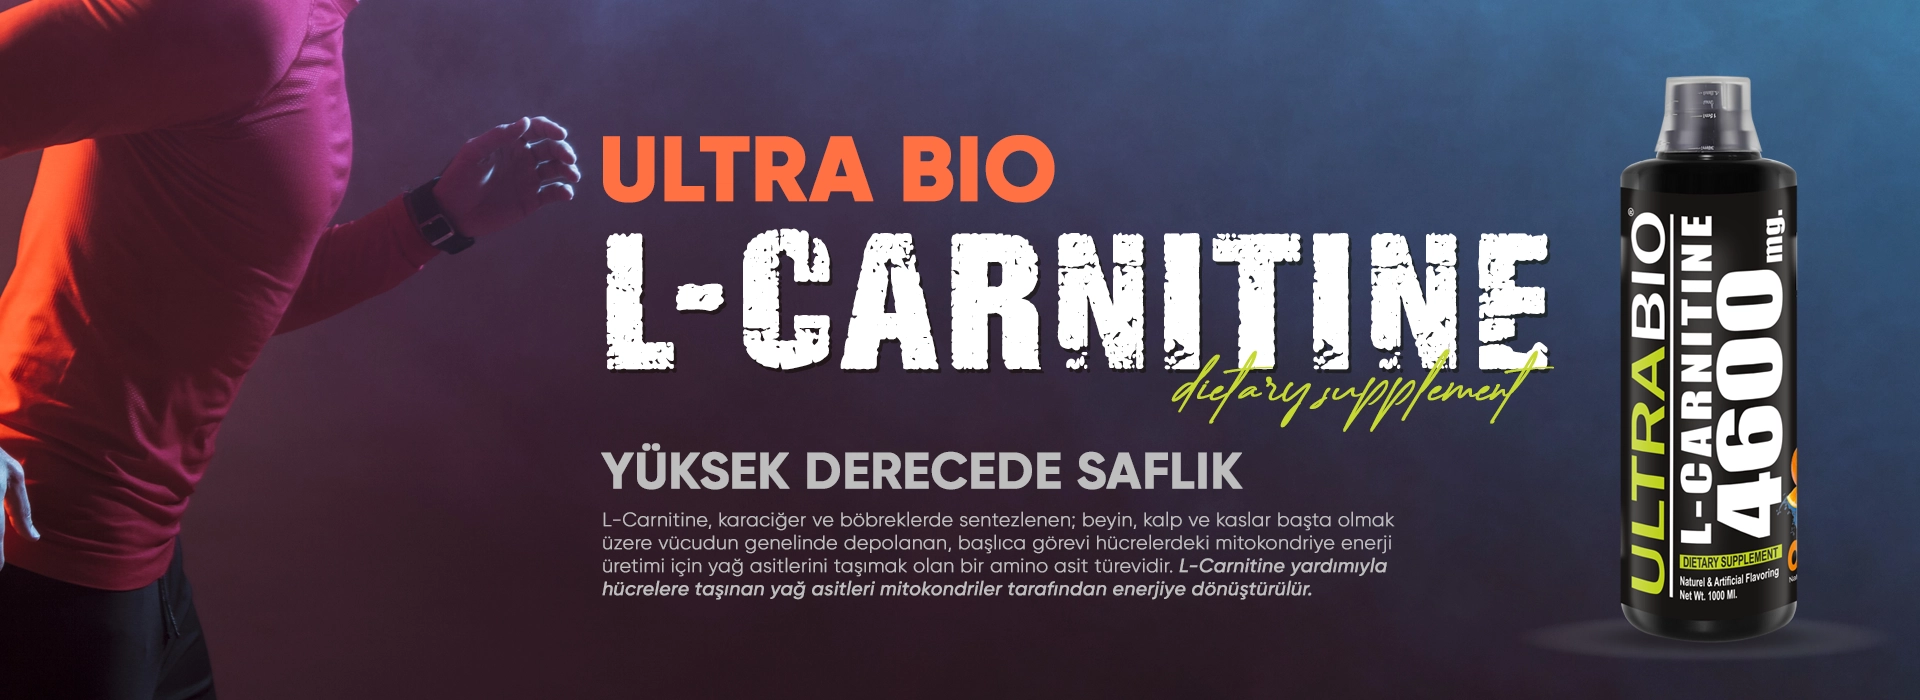 Ultrabio L-Carnitine